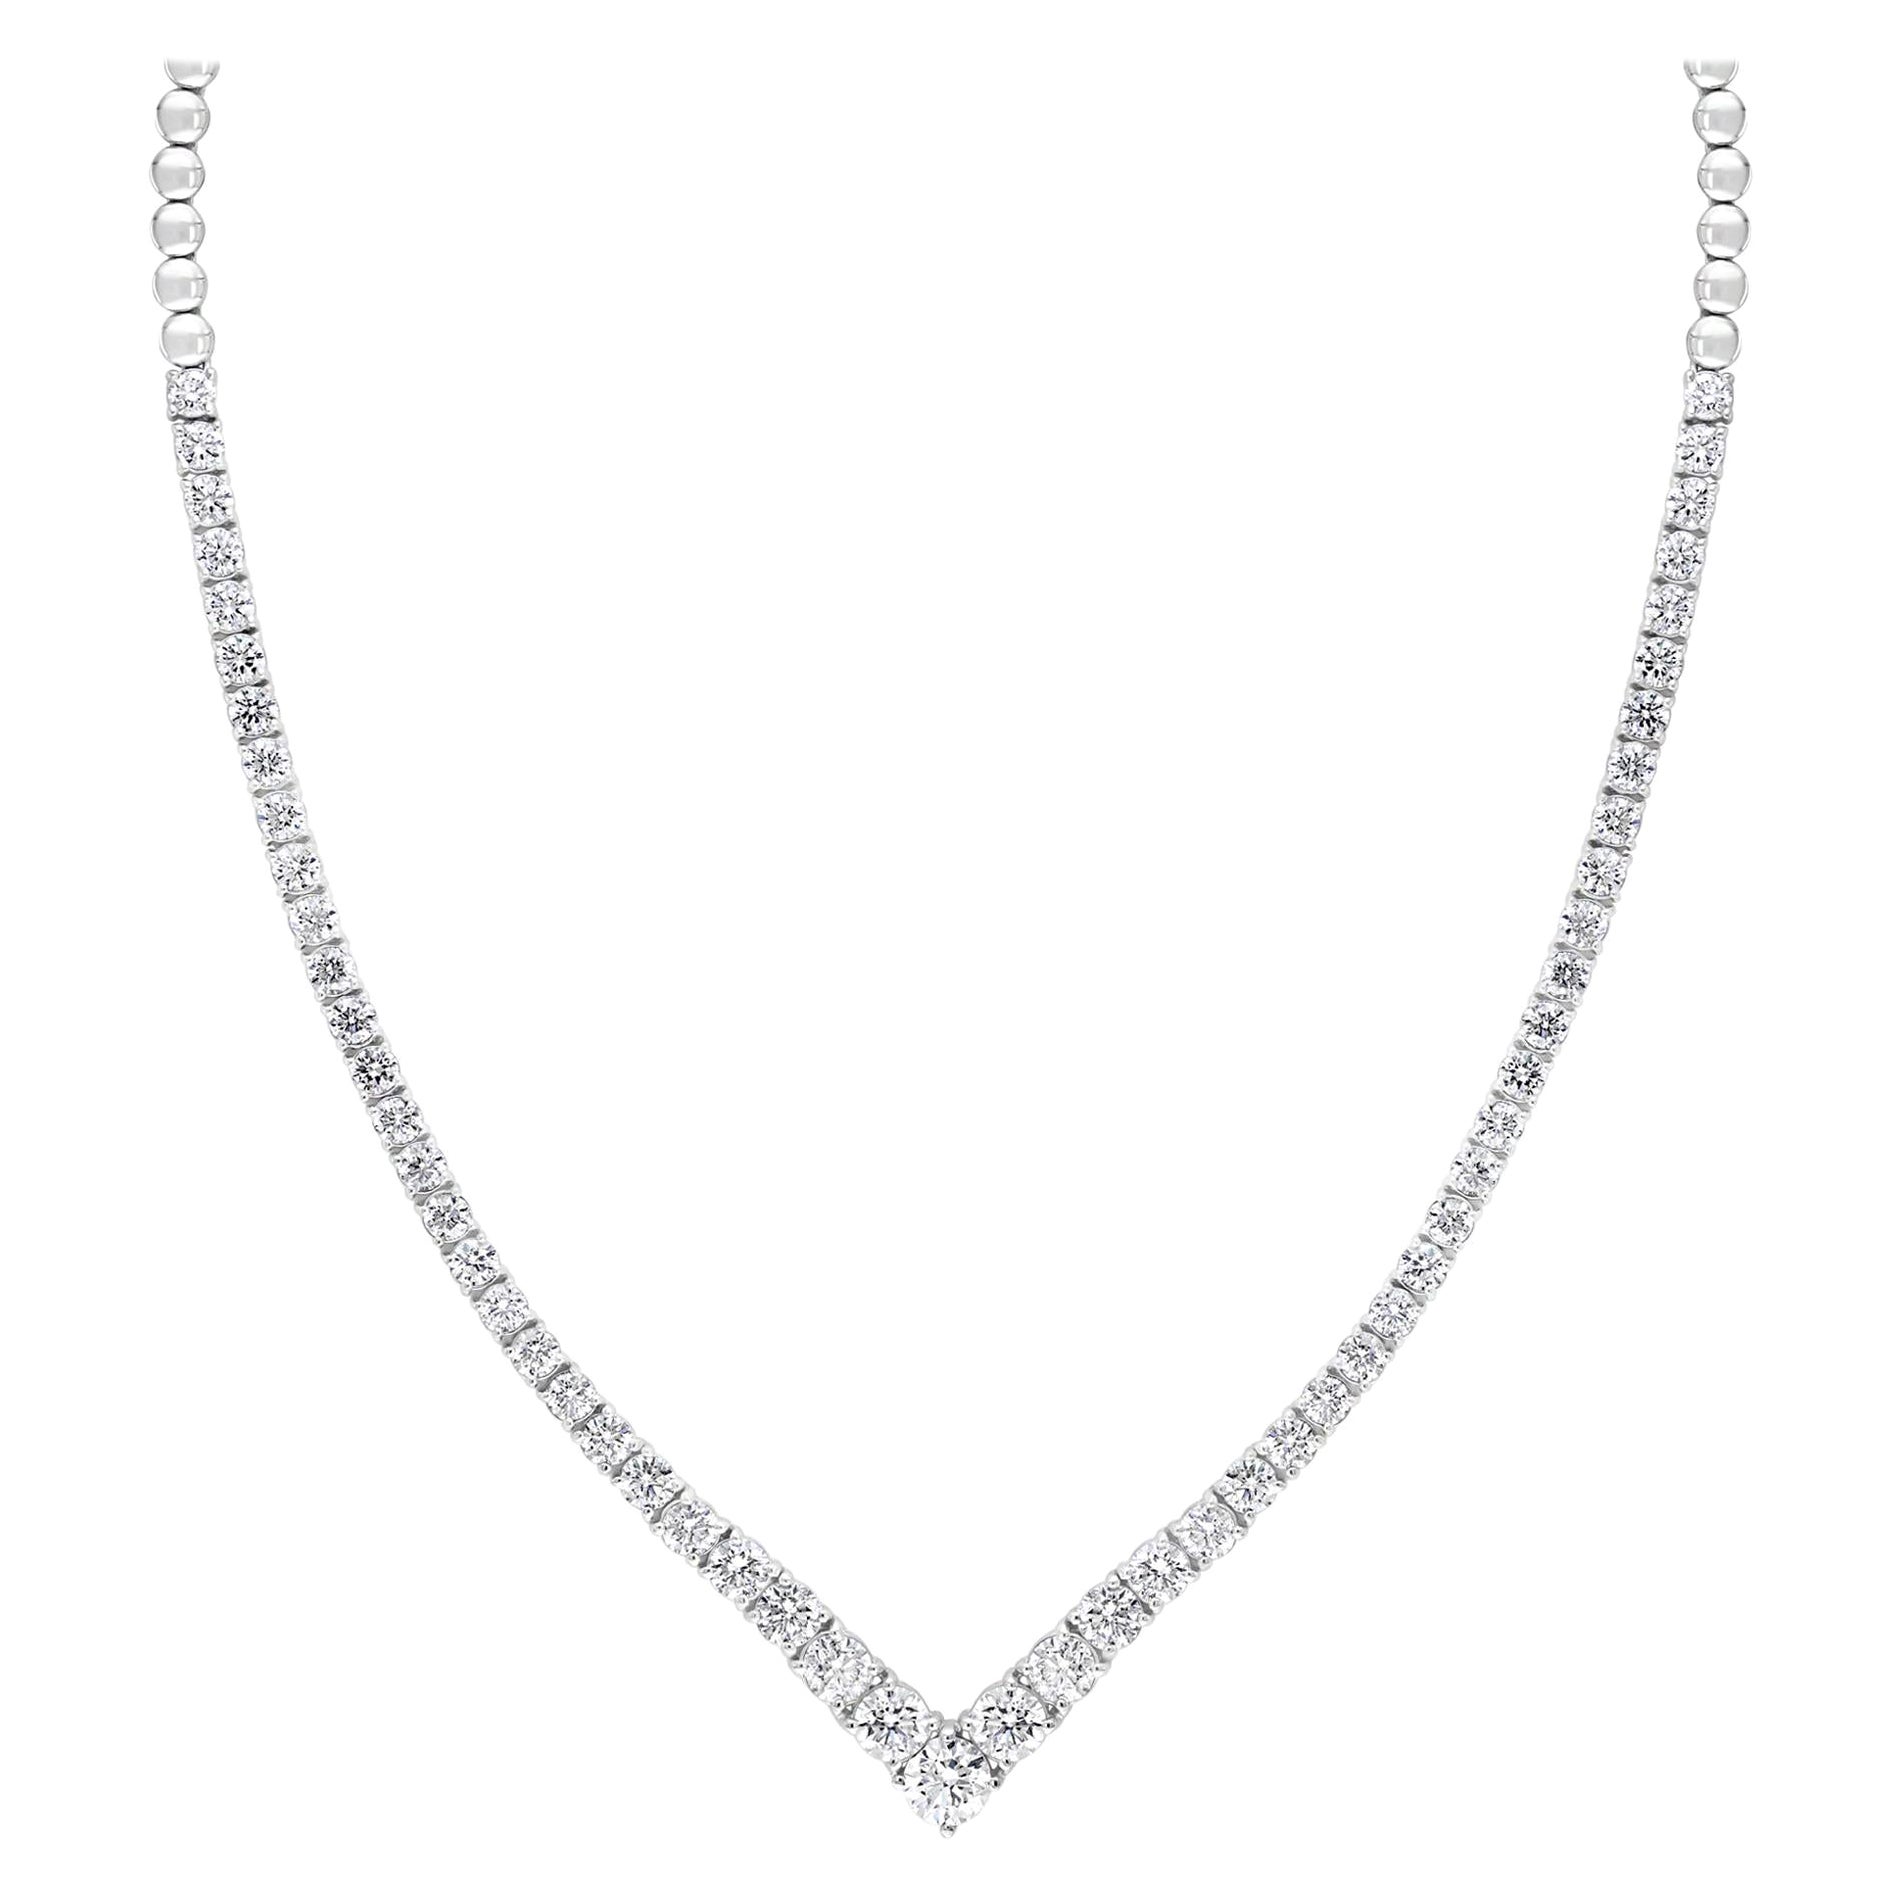 5.05 Carat Round Brilliant Diamond Graduating Necklace in 14K White Gold